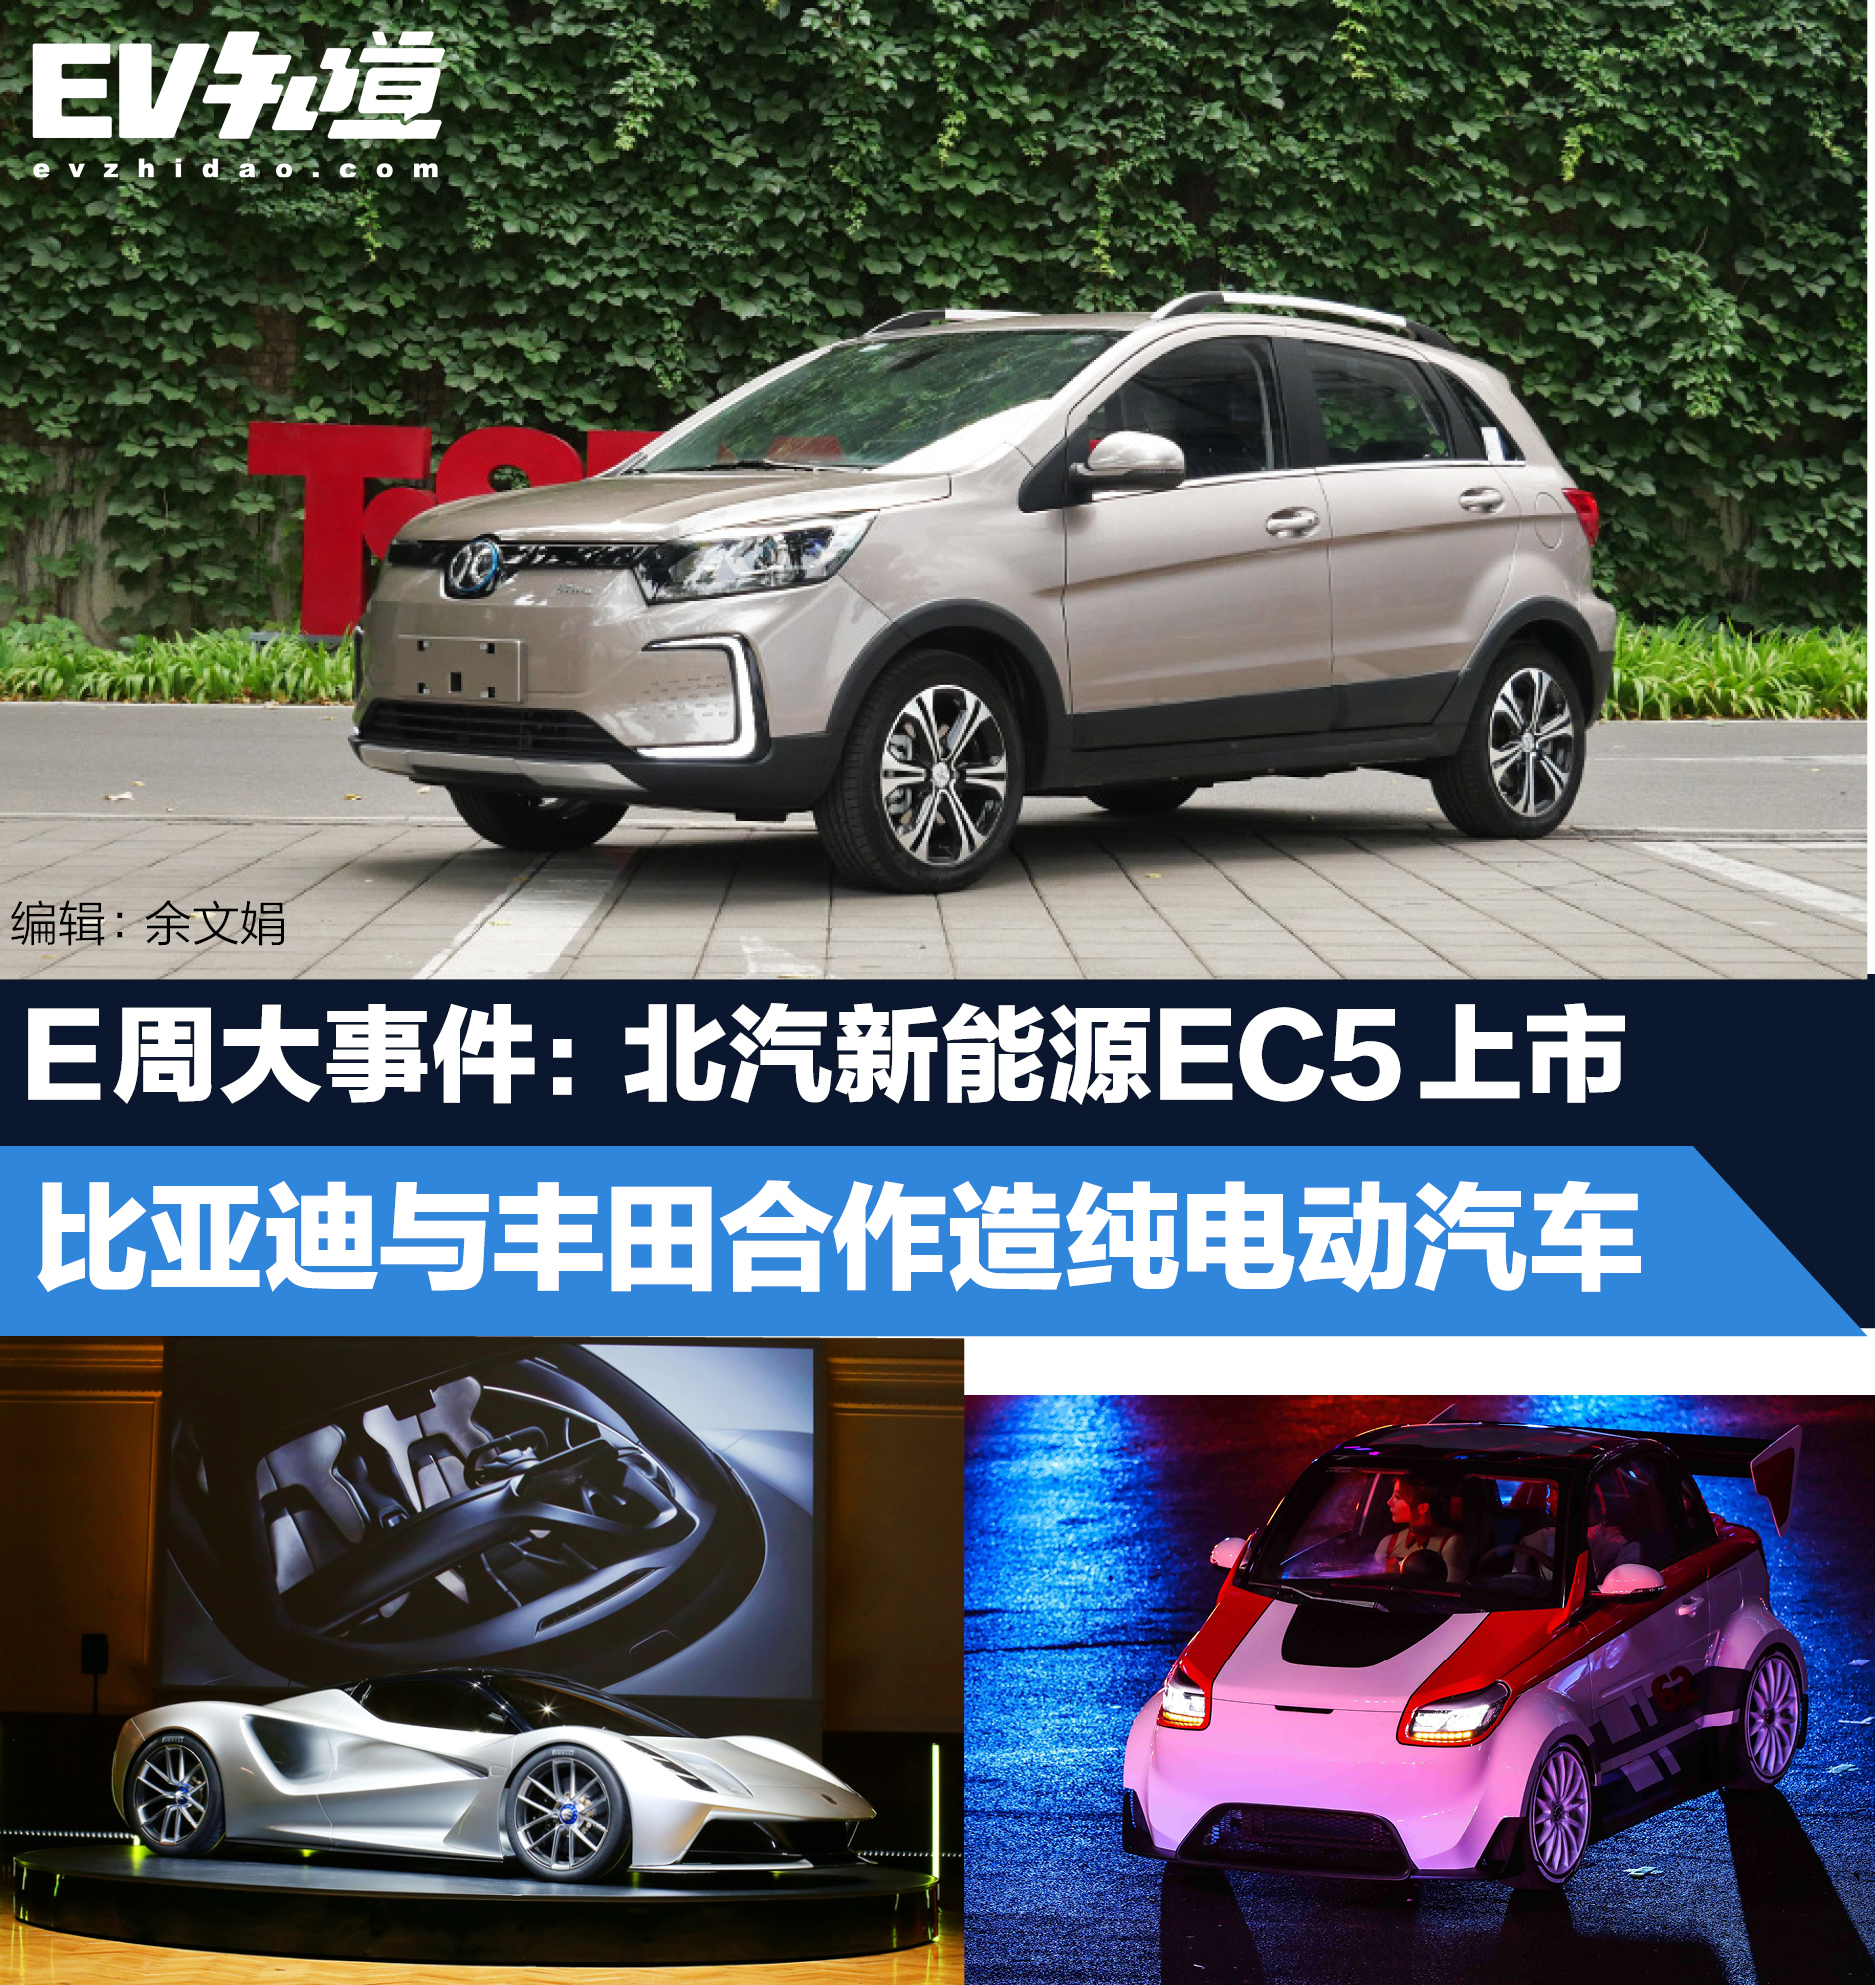 E周大事件：比亚迪与丰田合作造电动车/EC5上市